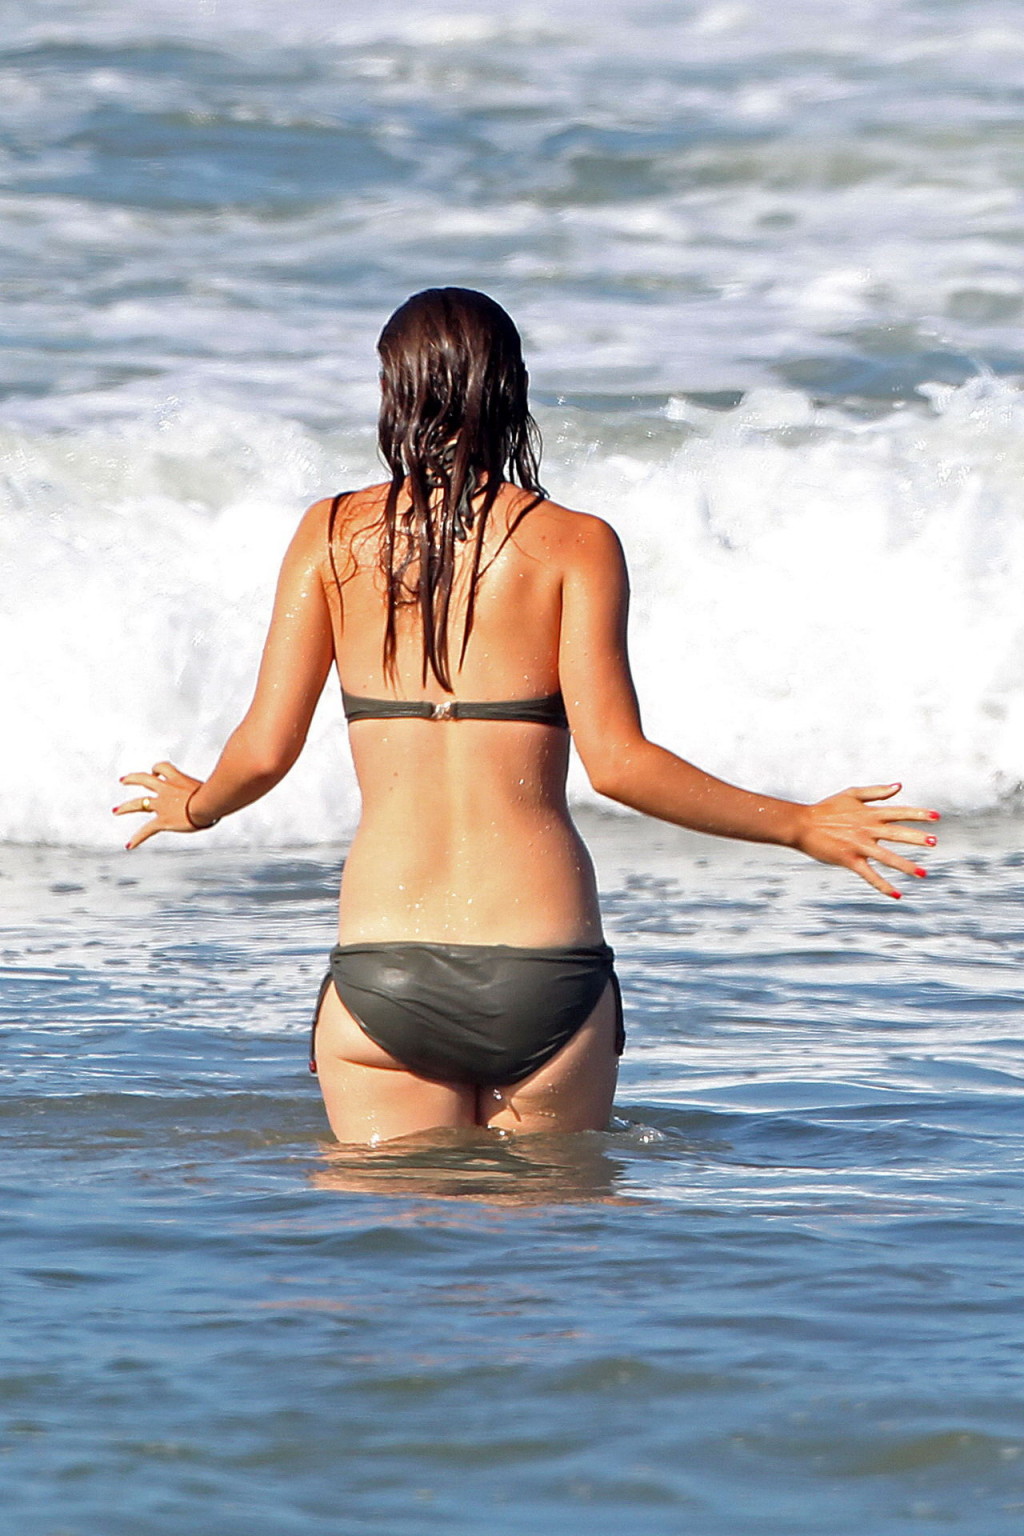 Olivia Wilde se ve muy sexy en bikini mojado en la playa
 #75335363